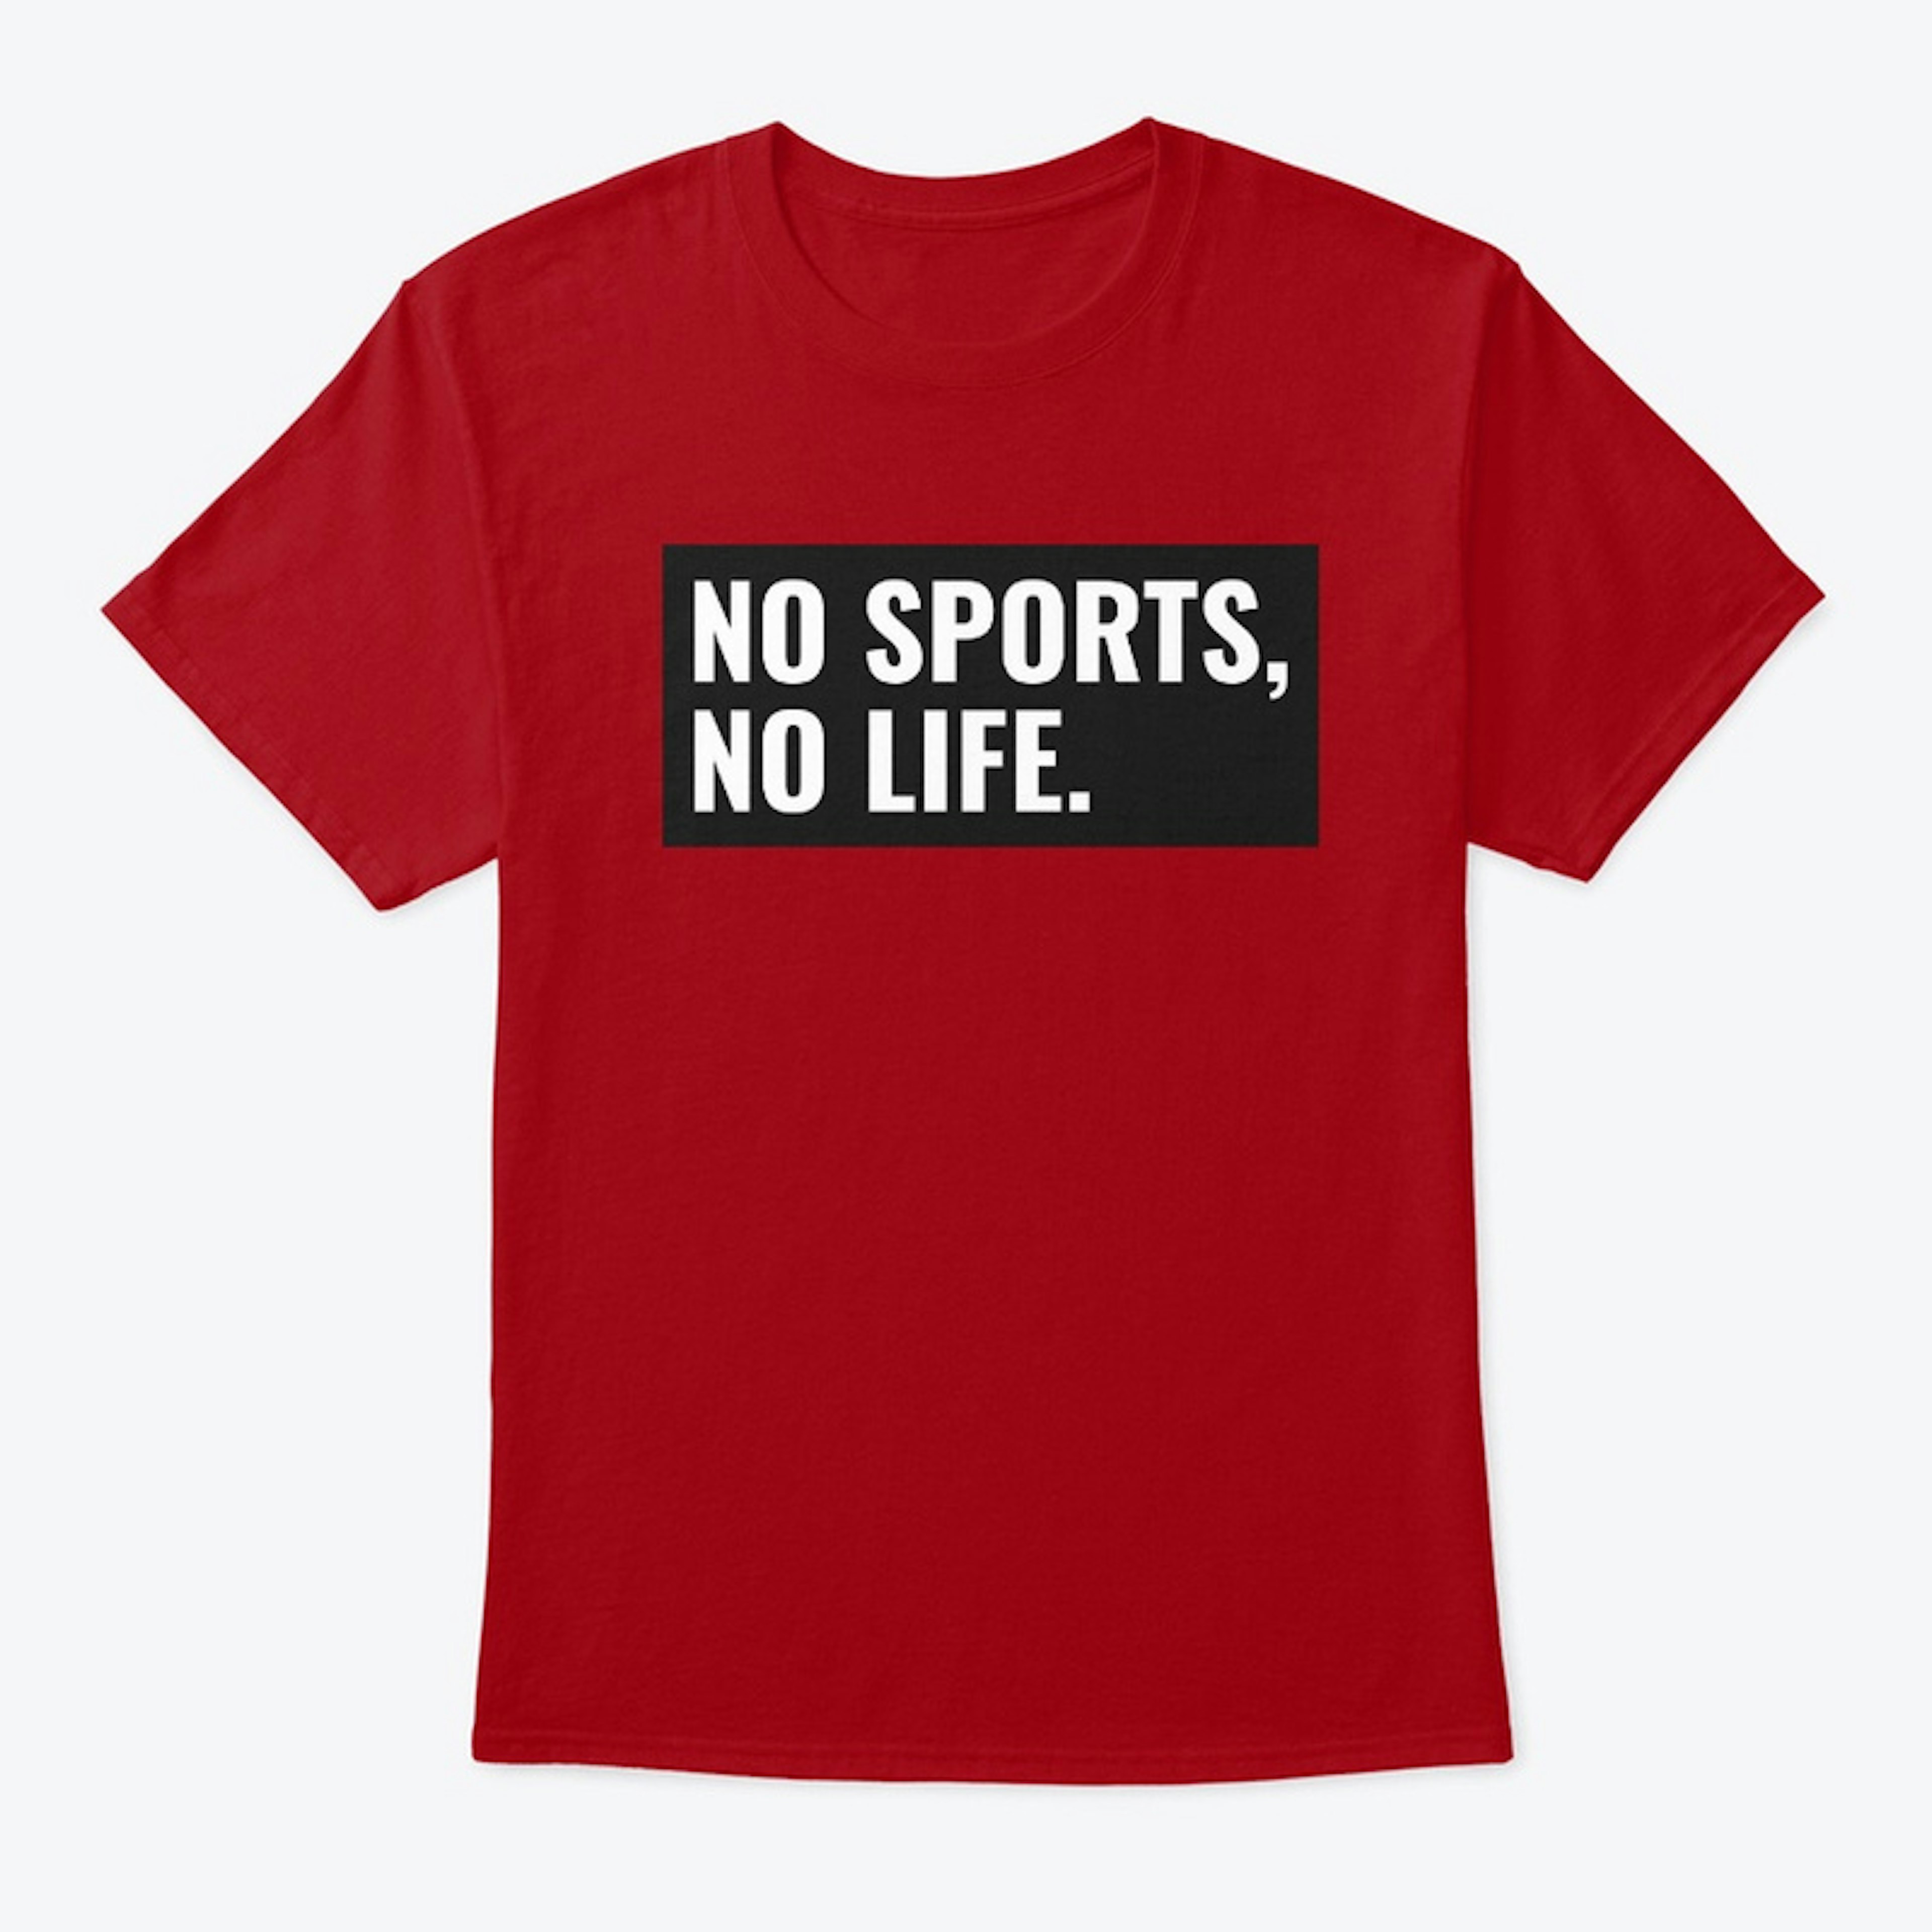 No sports, no life